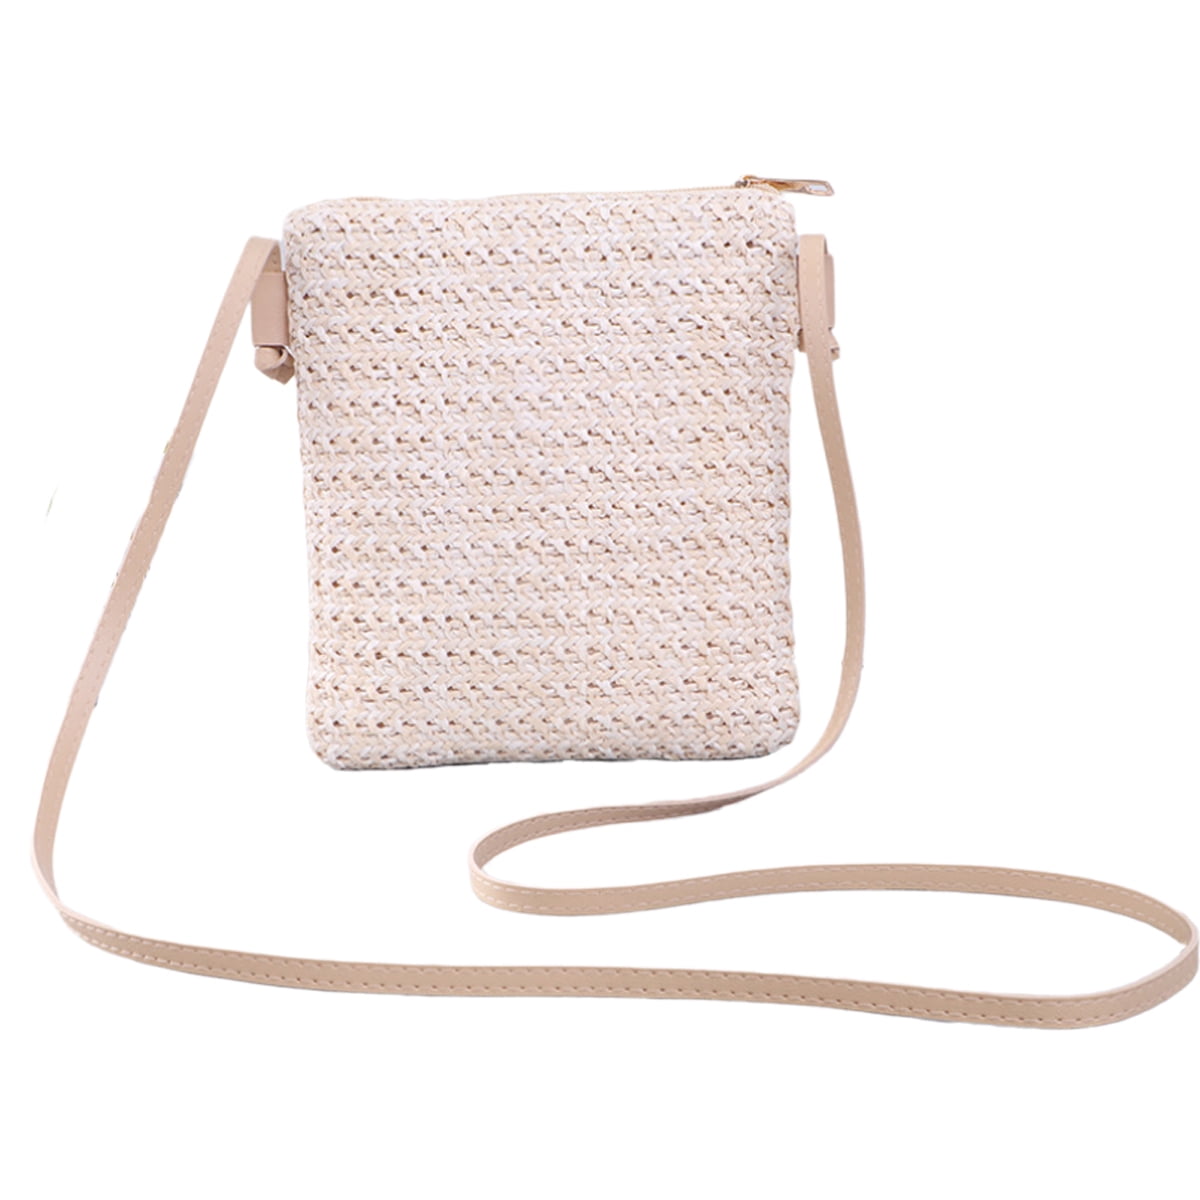 Ladies Owl Patterned Fashion Bag Tote Style Shoulder Satchel Handbag 5 Colours 